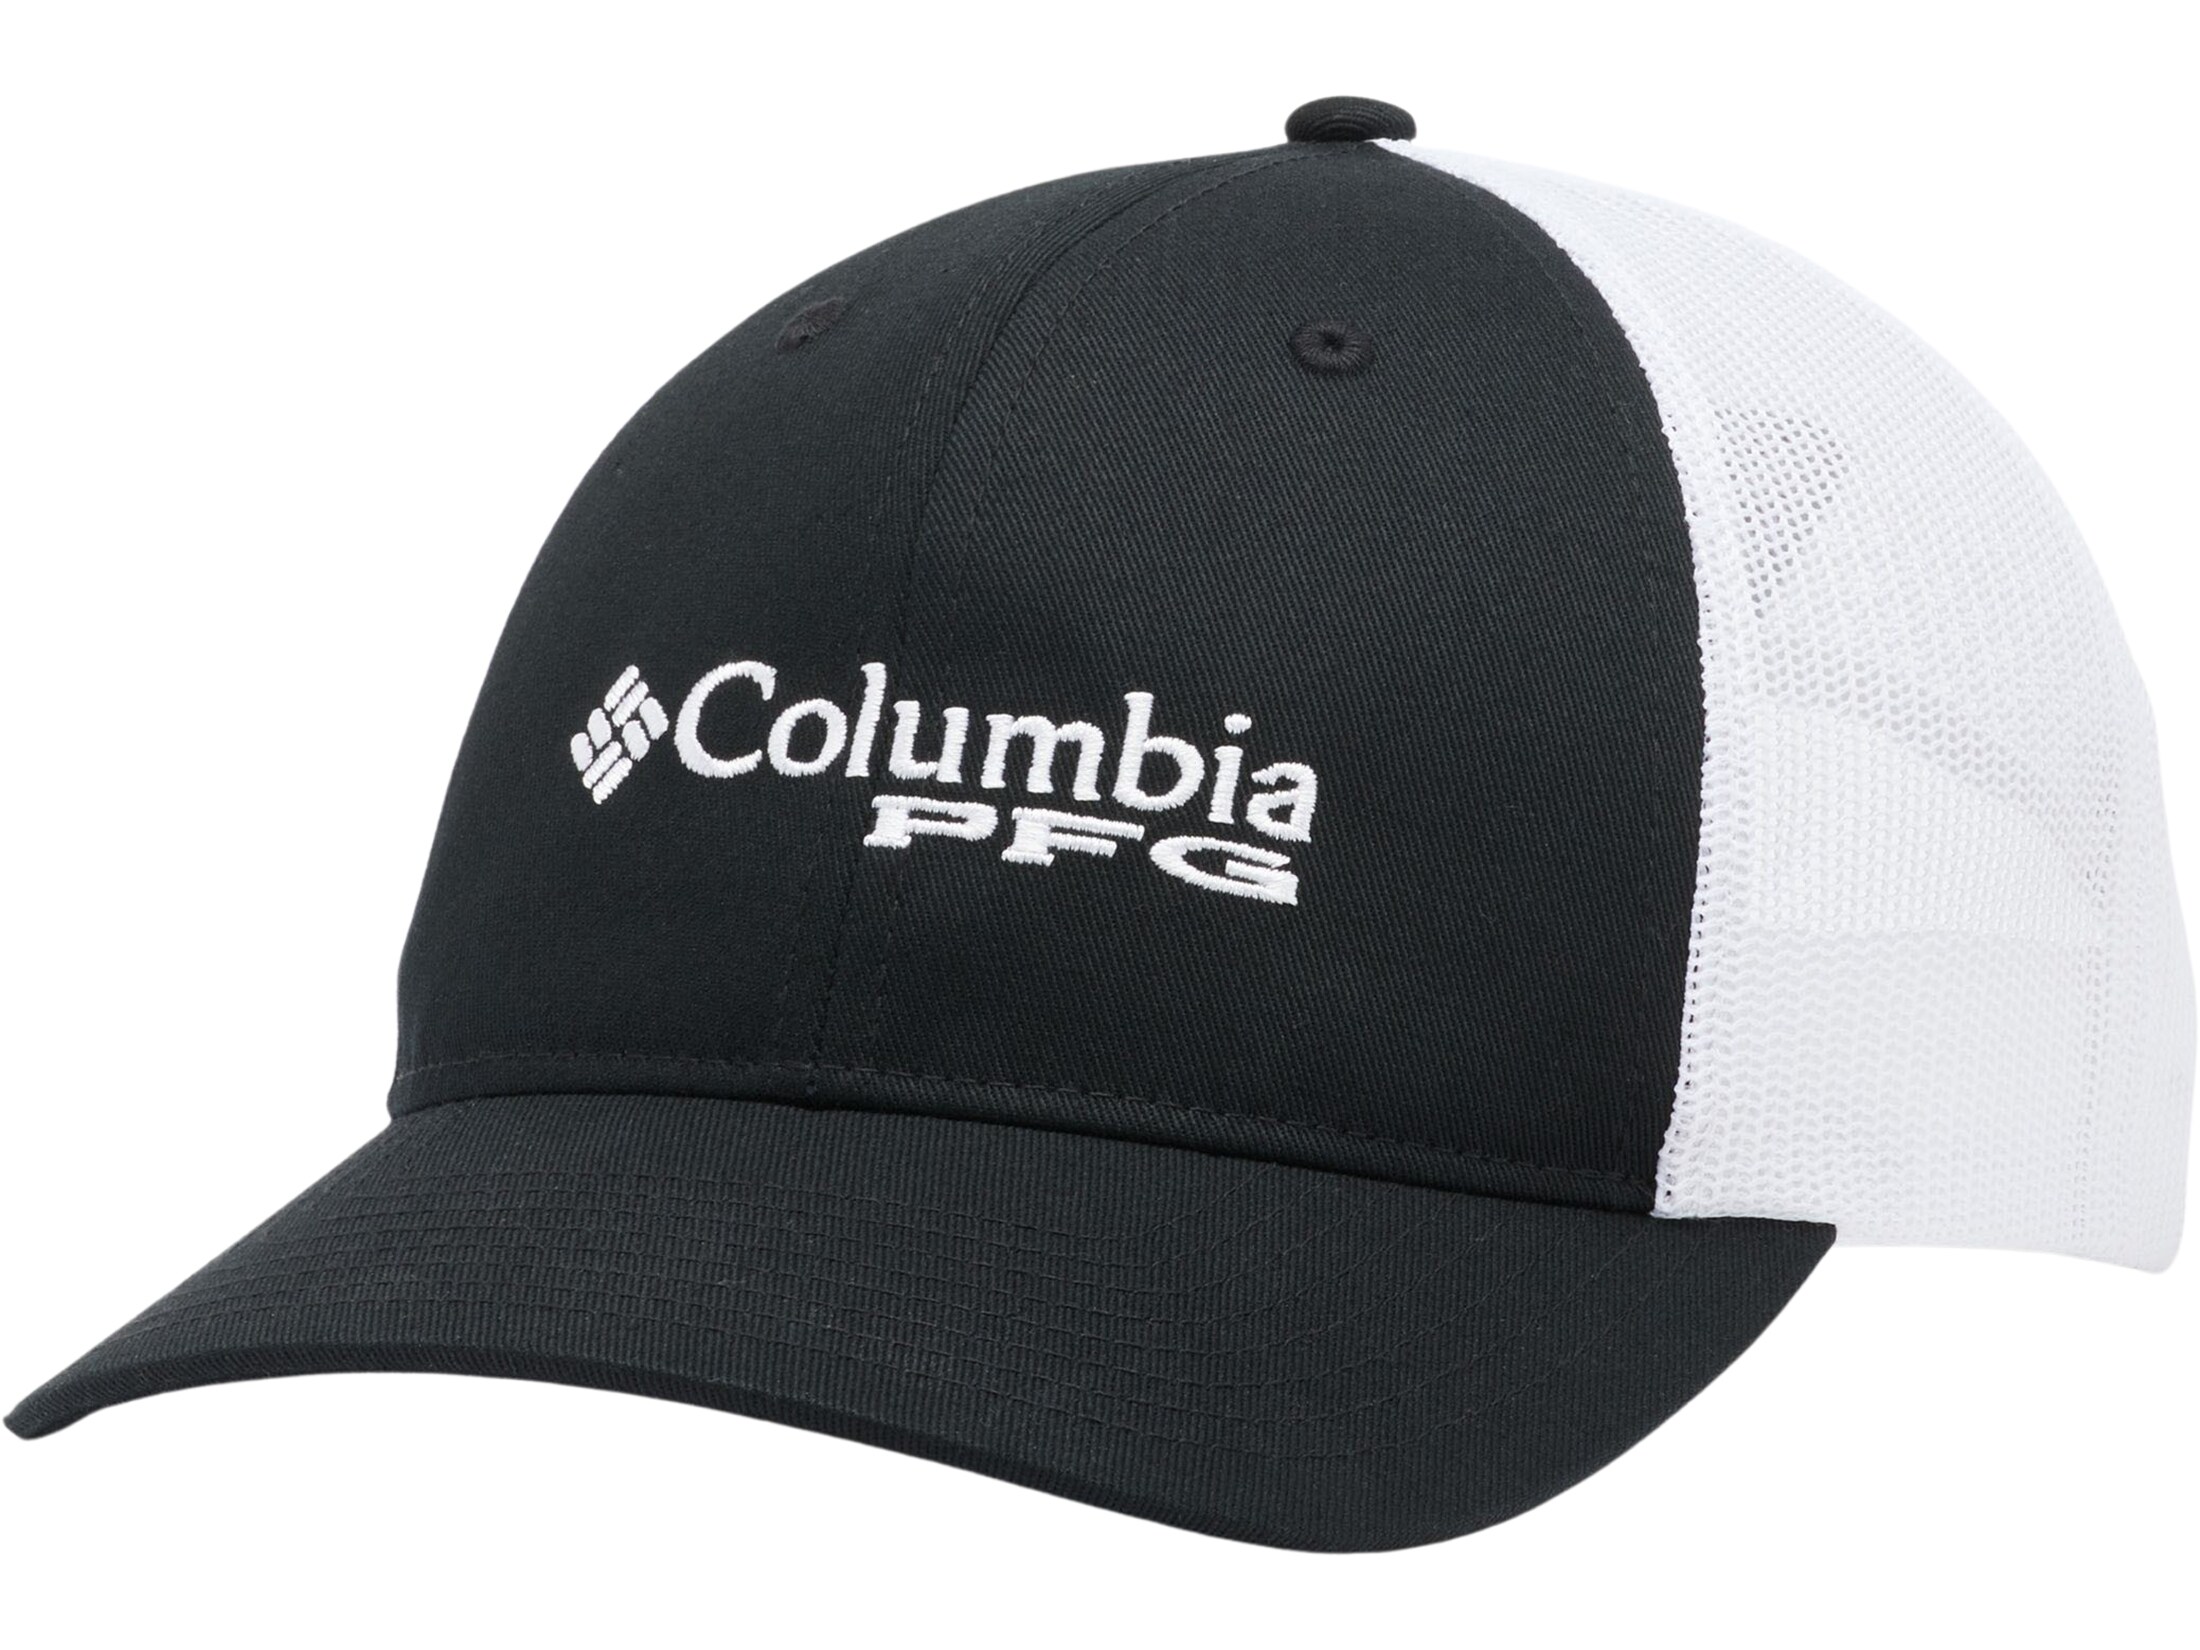 Columbia Men's PFG Trucker Snap Back Cap Black/White One Size Fits